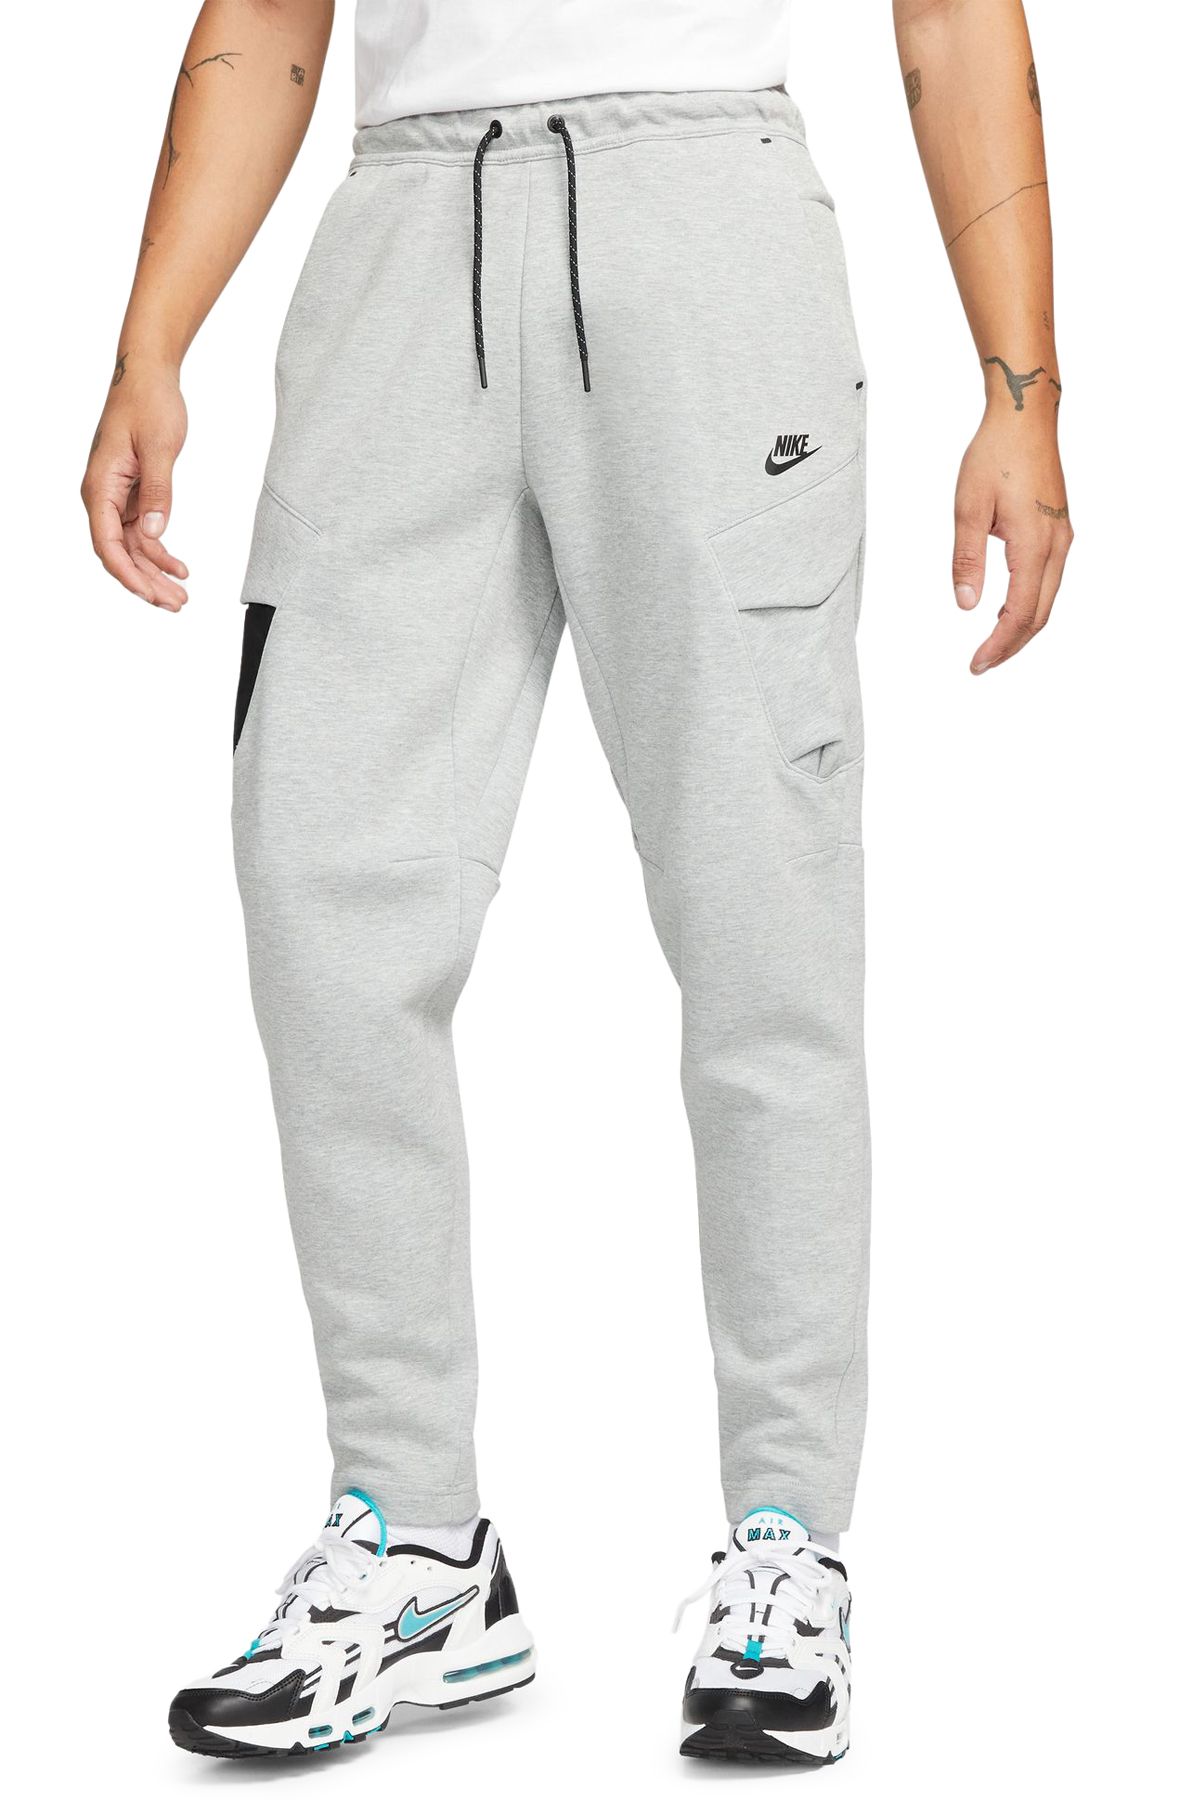 NEW Nike Tech Fleece Pants GIRLS SIZE 6X Sportswear BLACK WHITE 6 Toddler  jeans